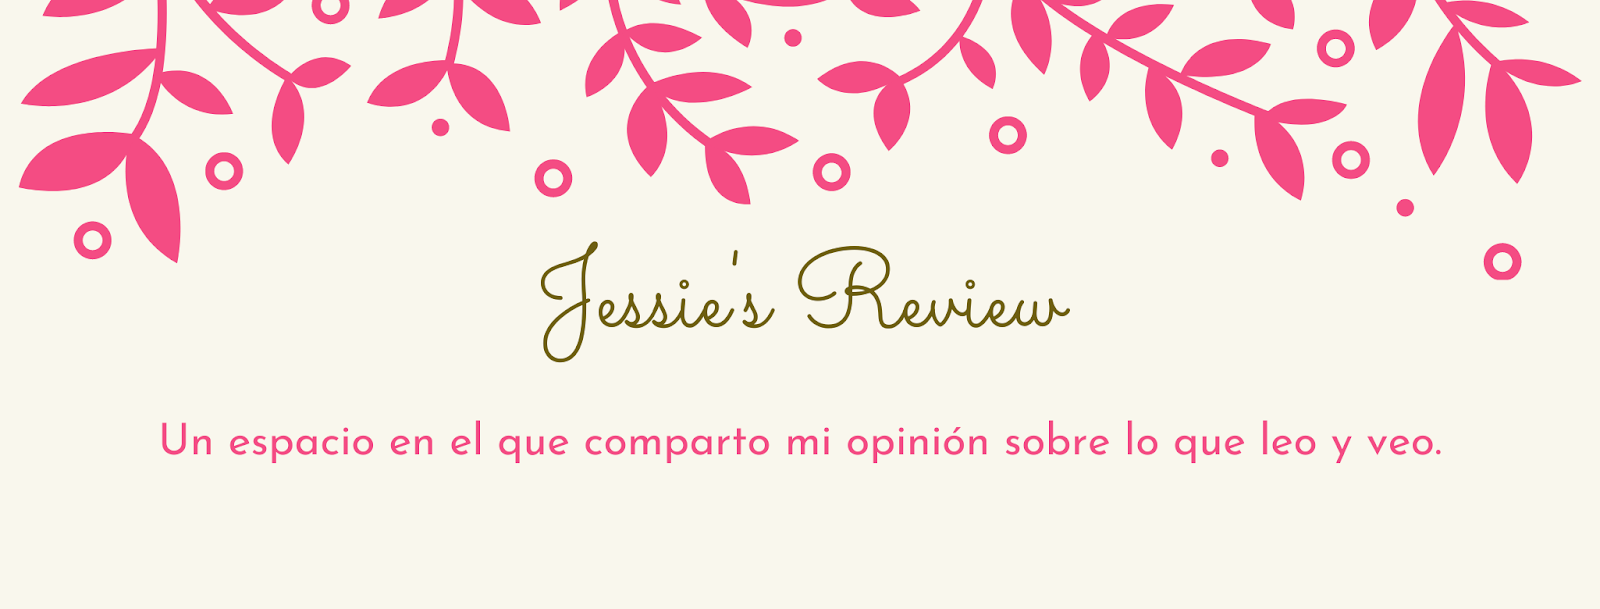 Jessie's Reviews